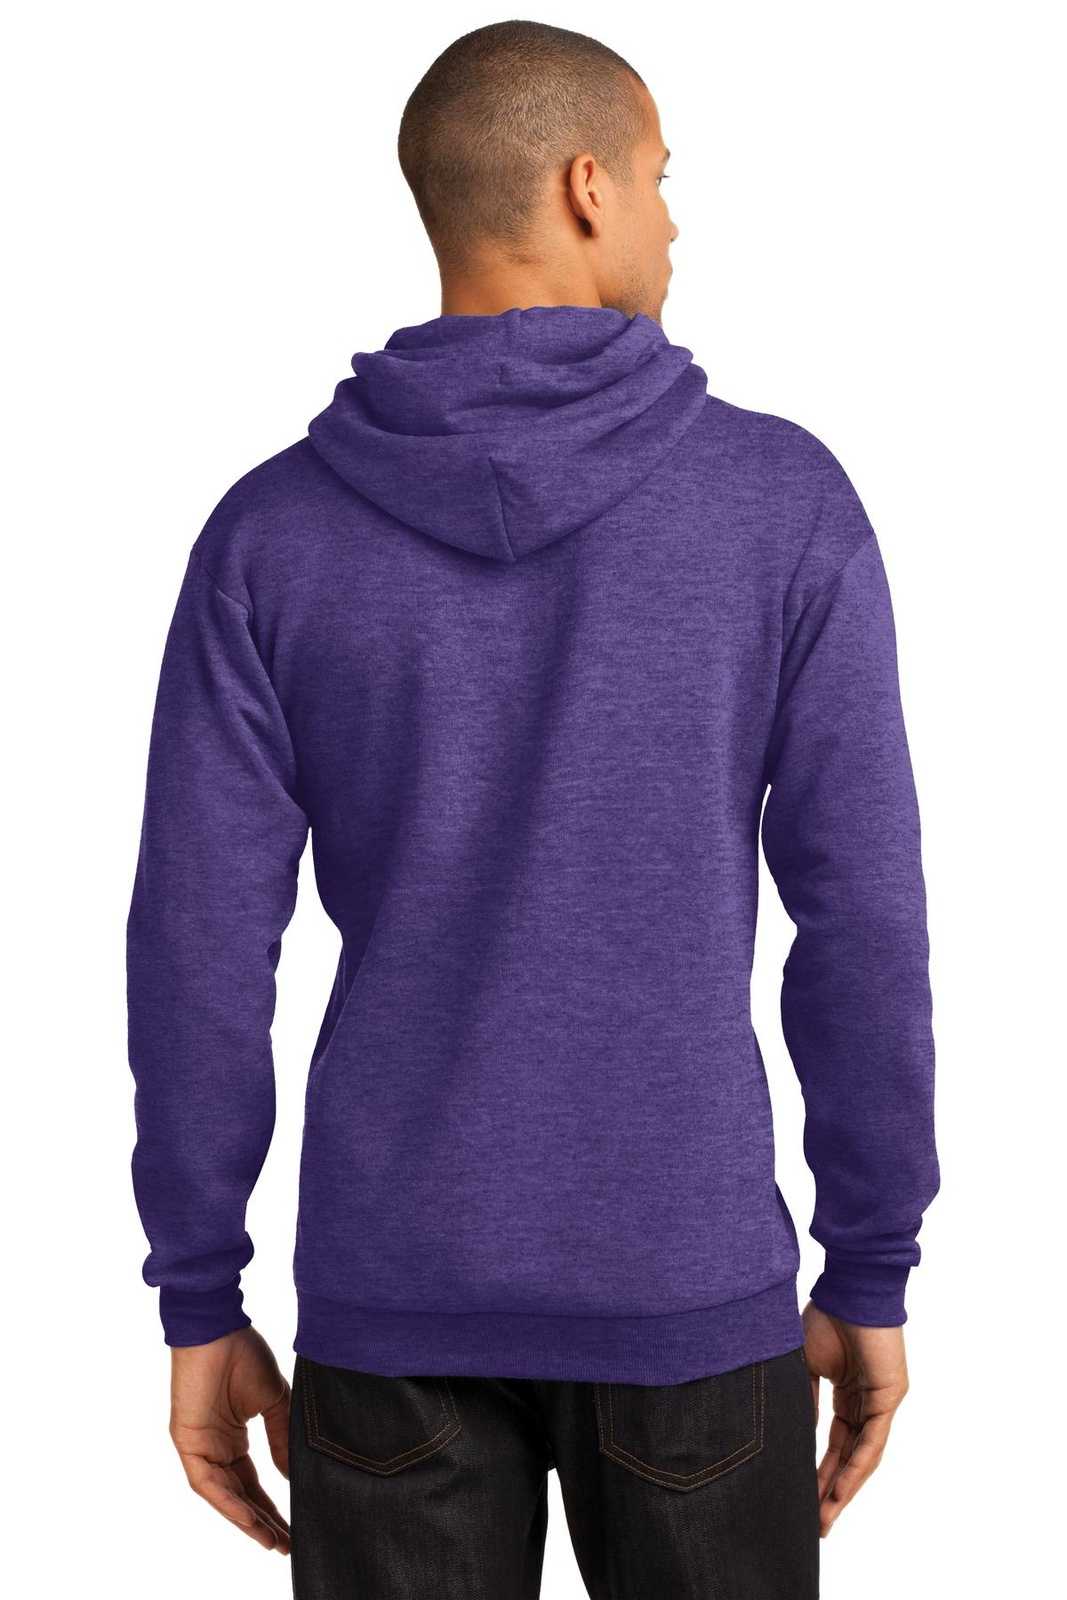 Port & Company PC78H Core Fleece Pullover Hooded Sweatshirt - Heather Purple - HIT a Double - 1